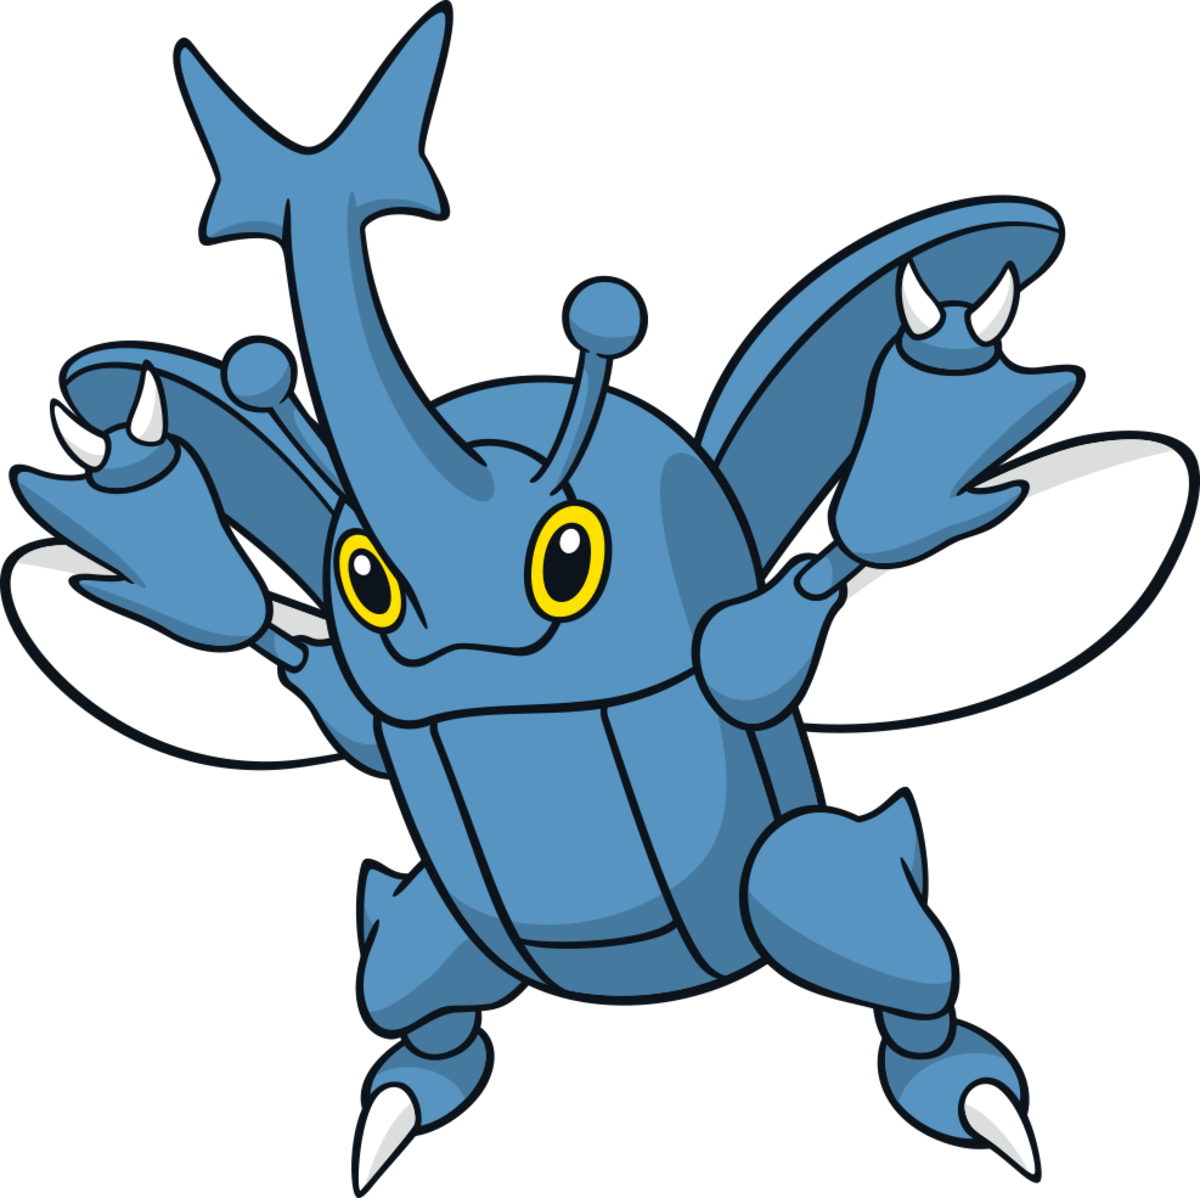 Heracross, the "Single Horn" Pokémon 